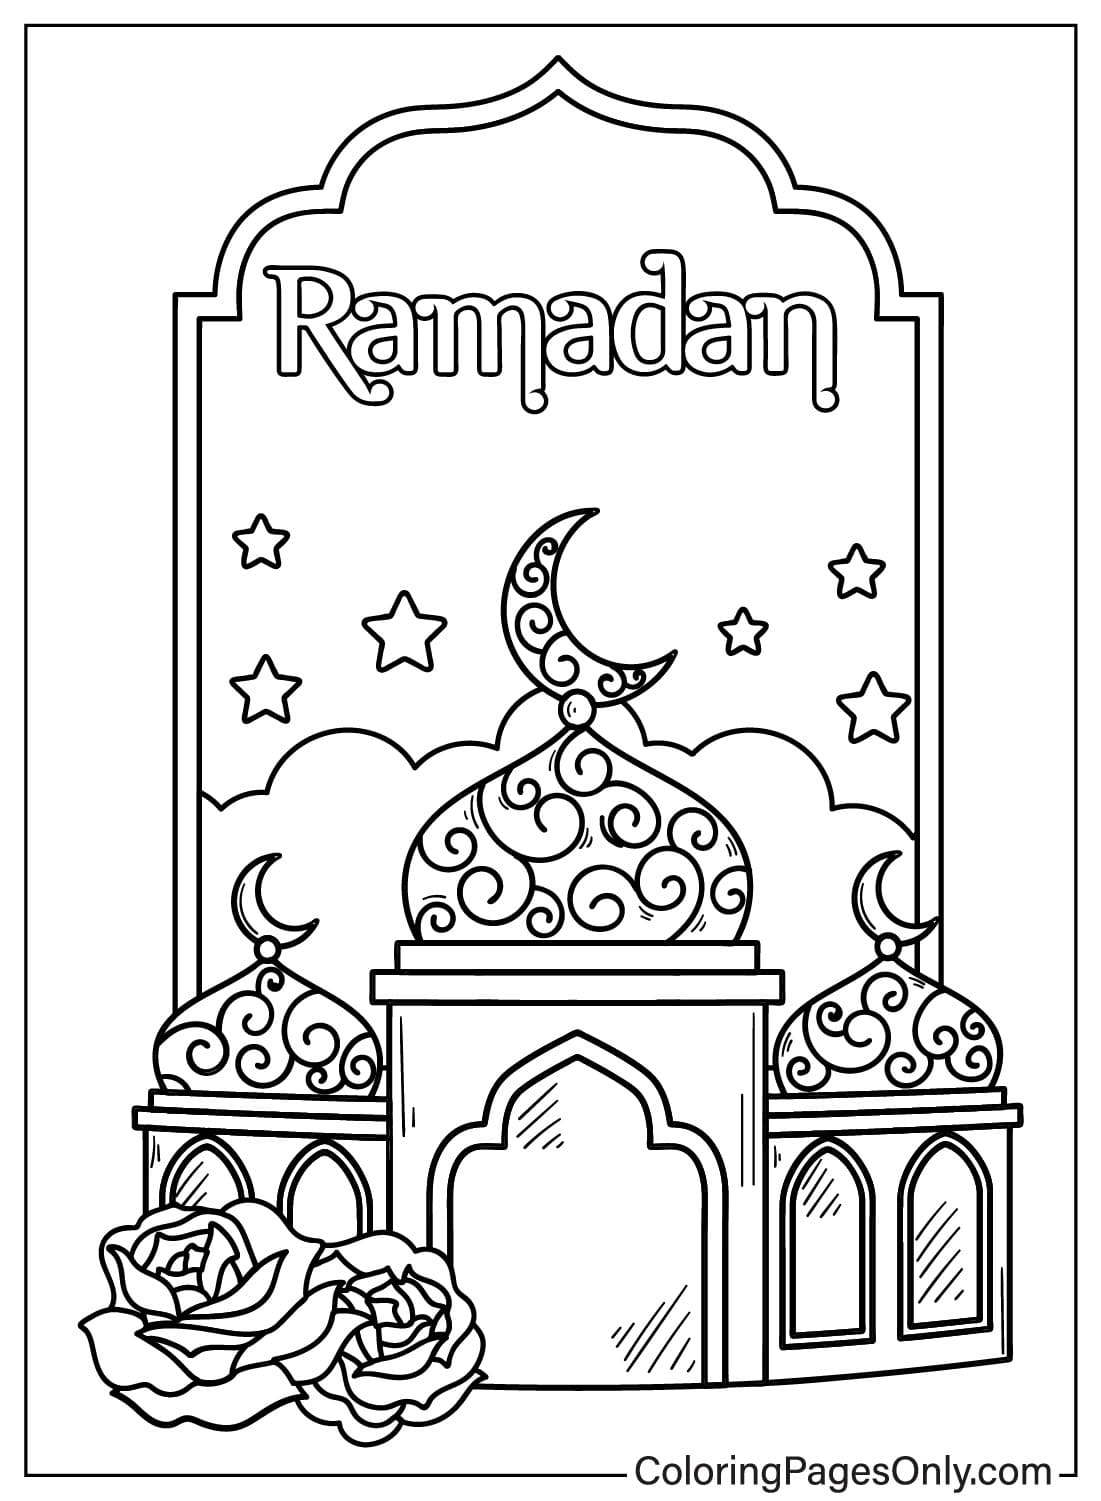 Ramadan evenement kleurplaat van Ramadan